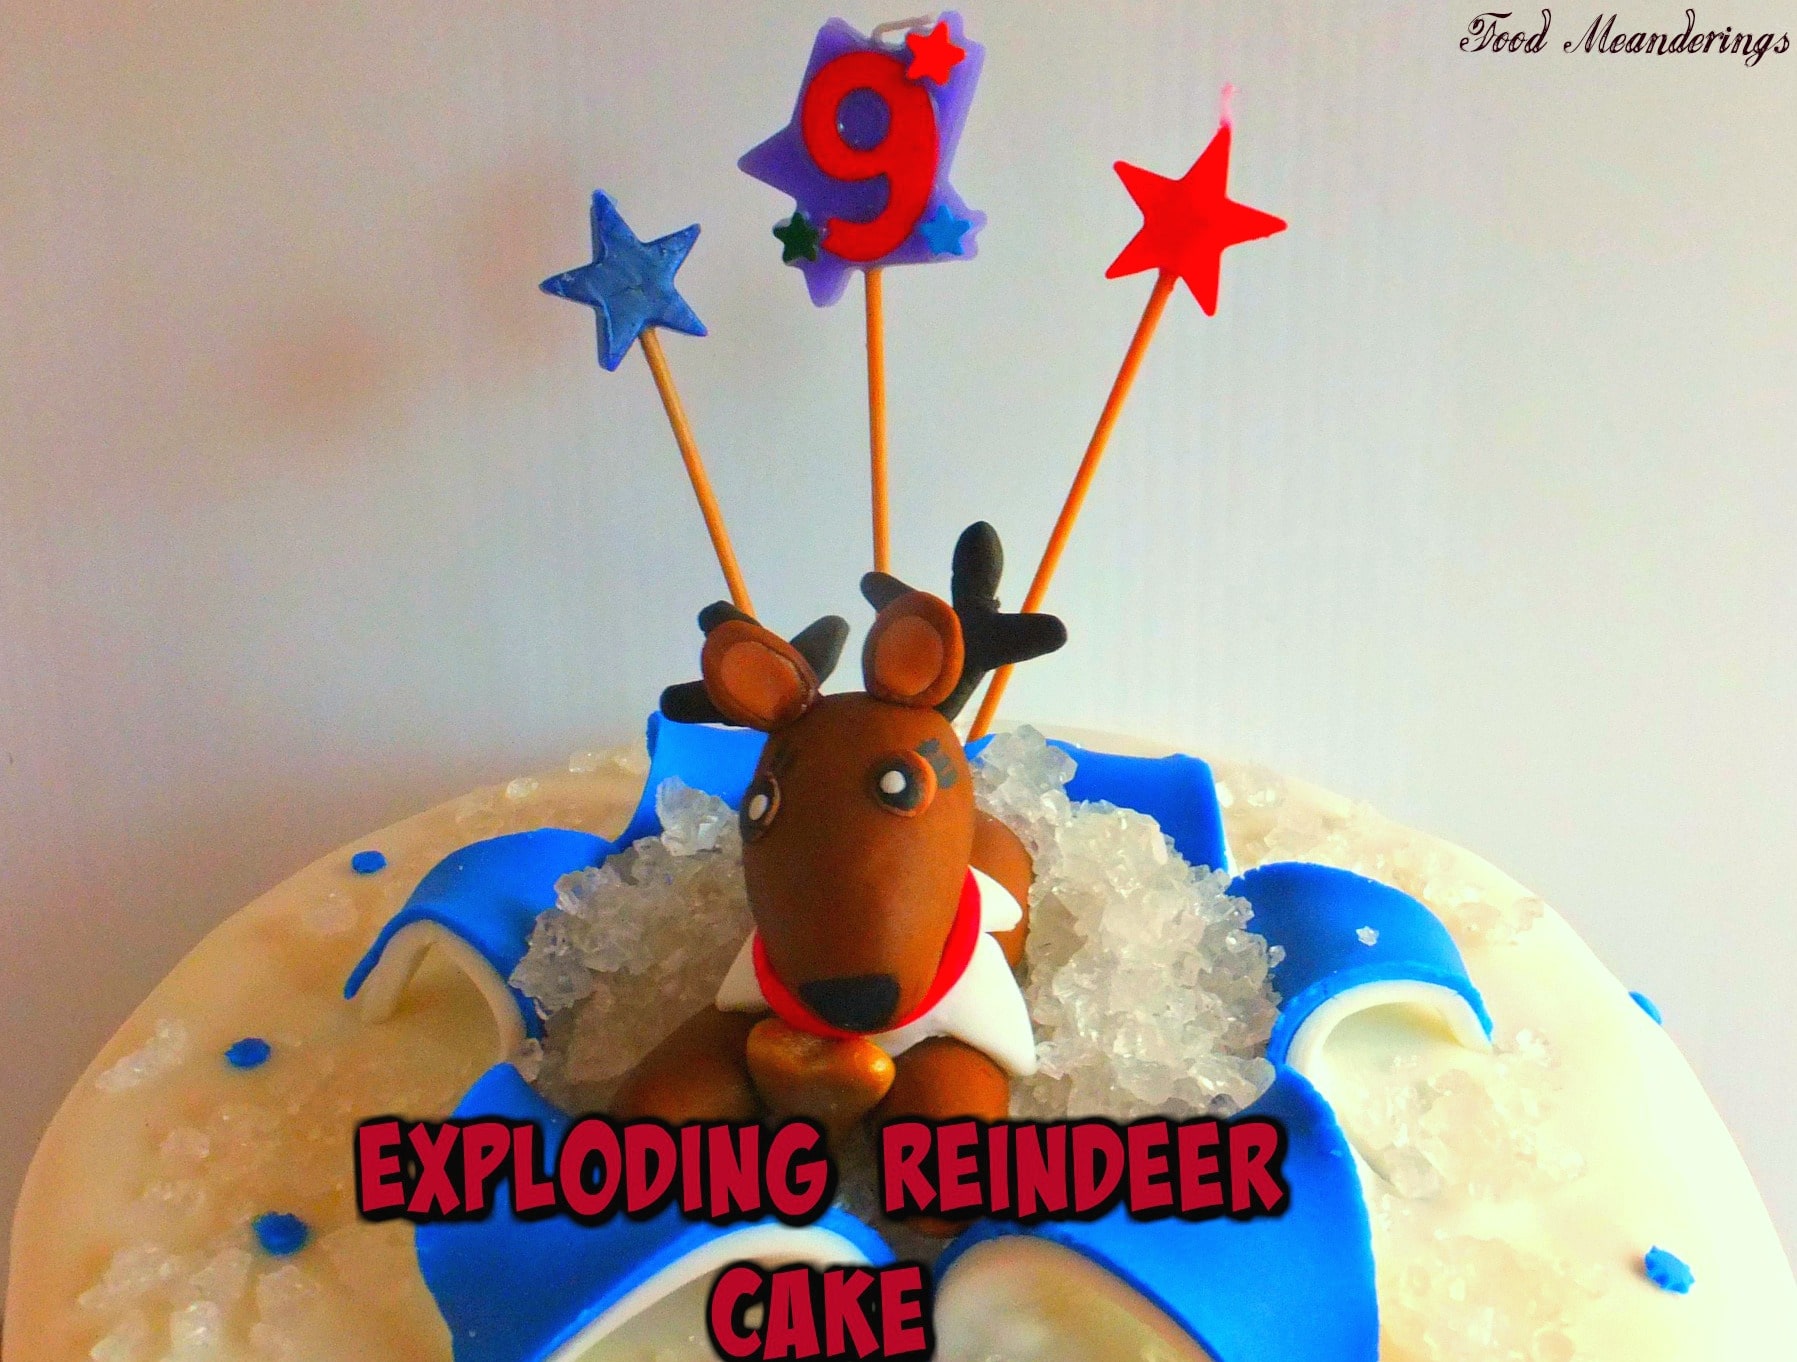 Exploding reindeer cake